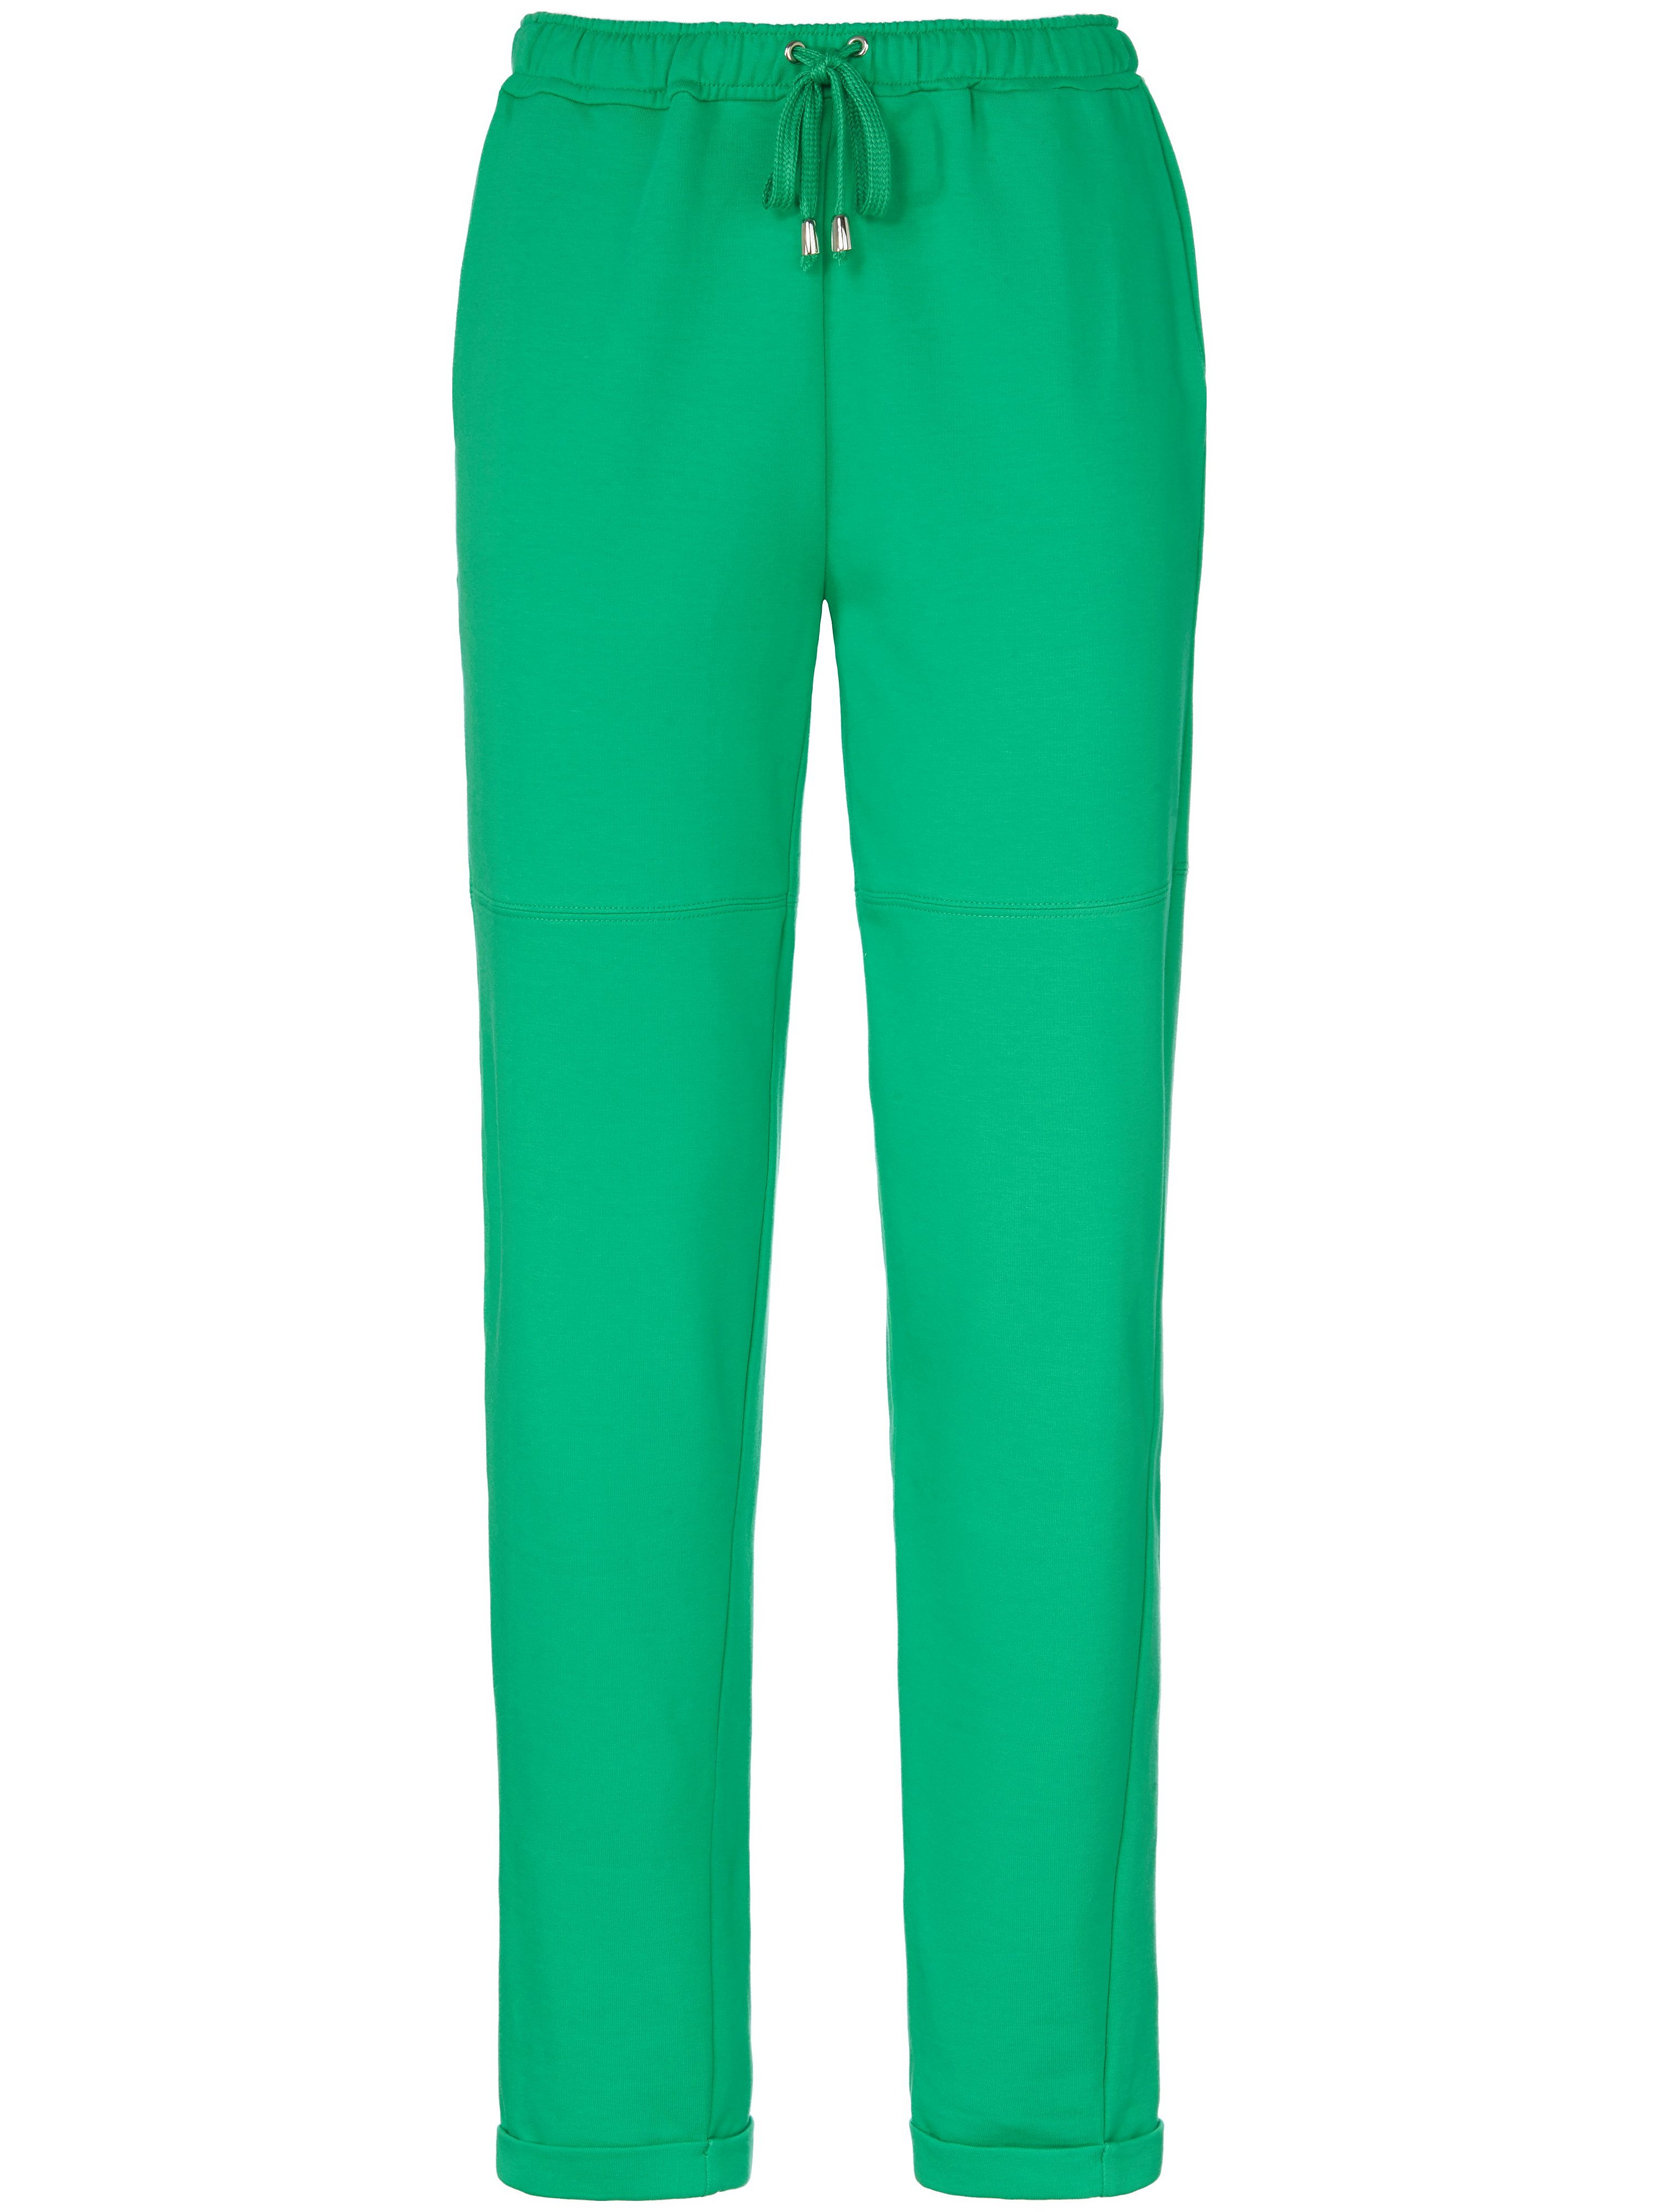 Le pantalon sweat  PETER HAHN PURE EDITION vert taille 46